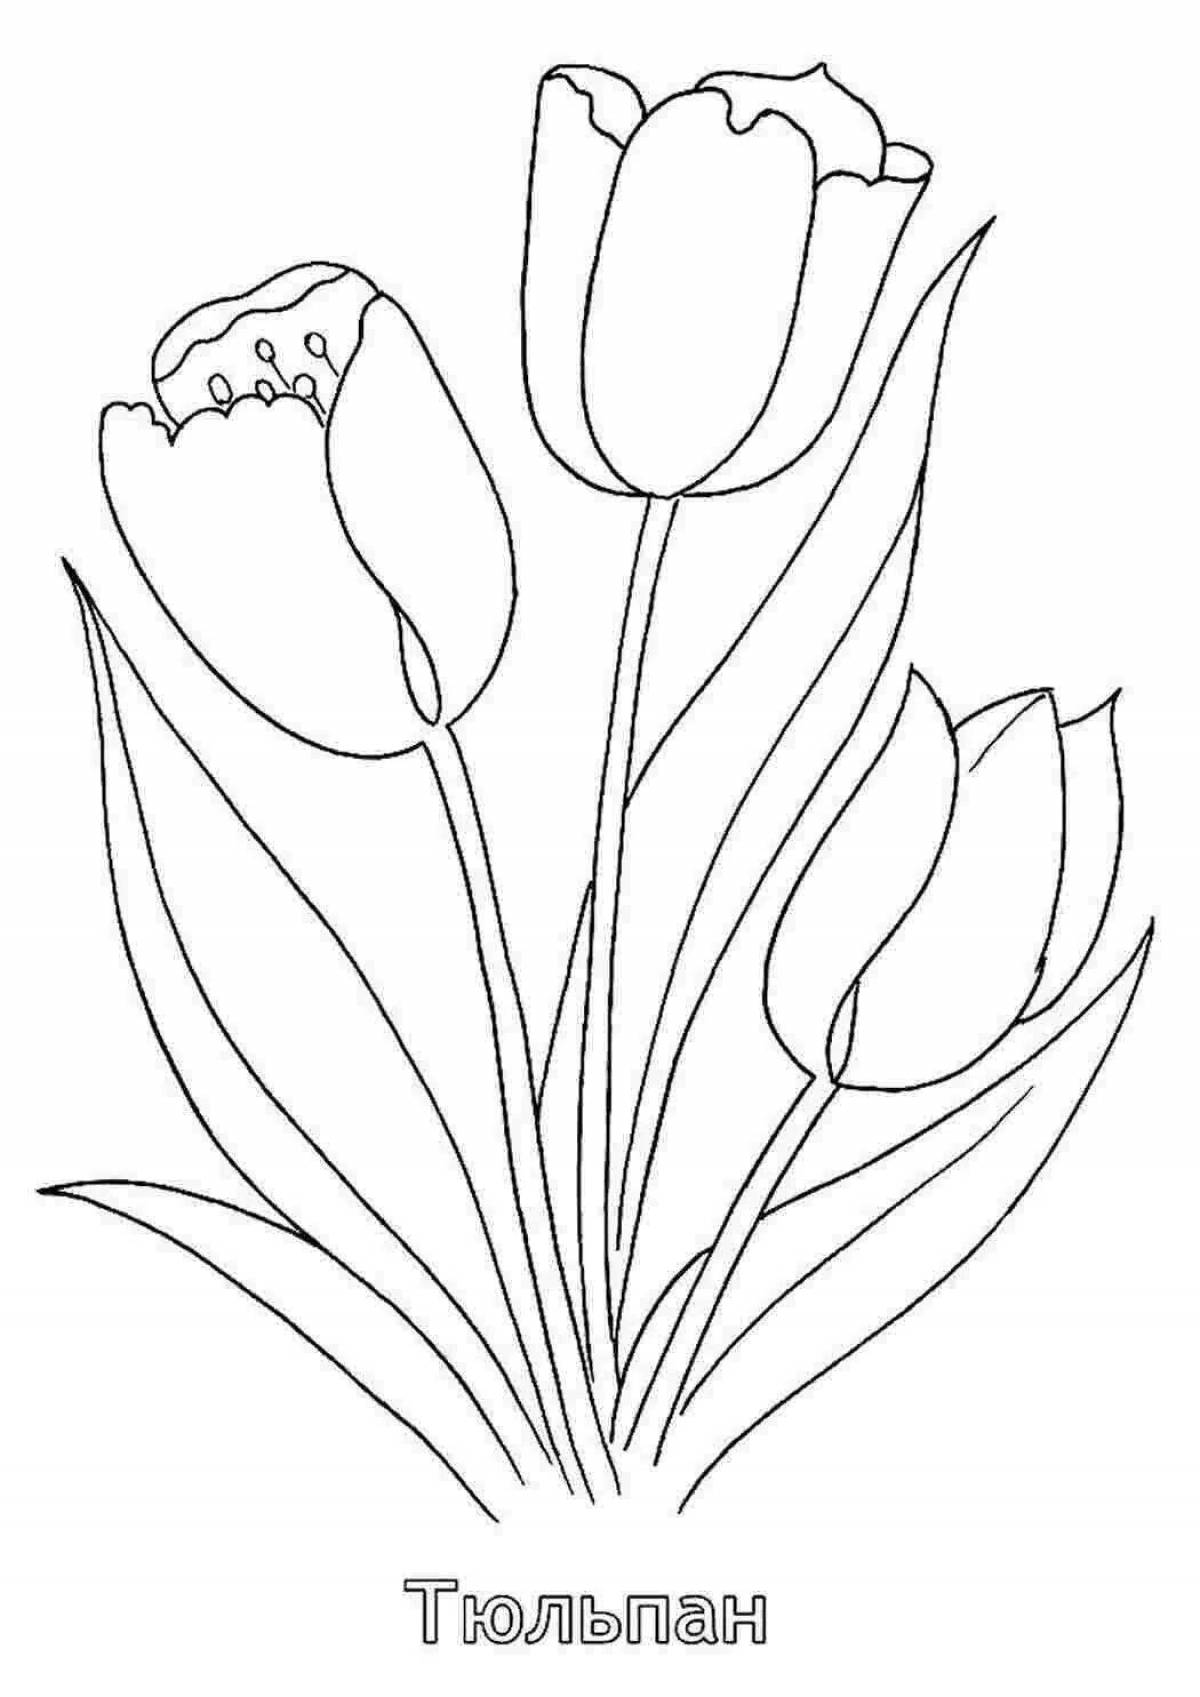 Brilliant tulip coloring book